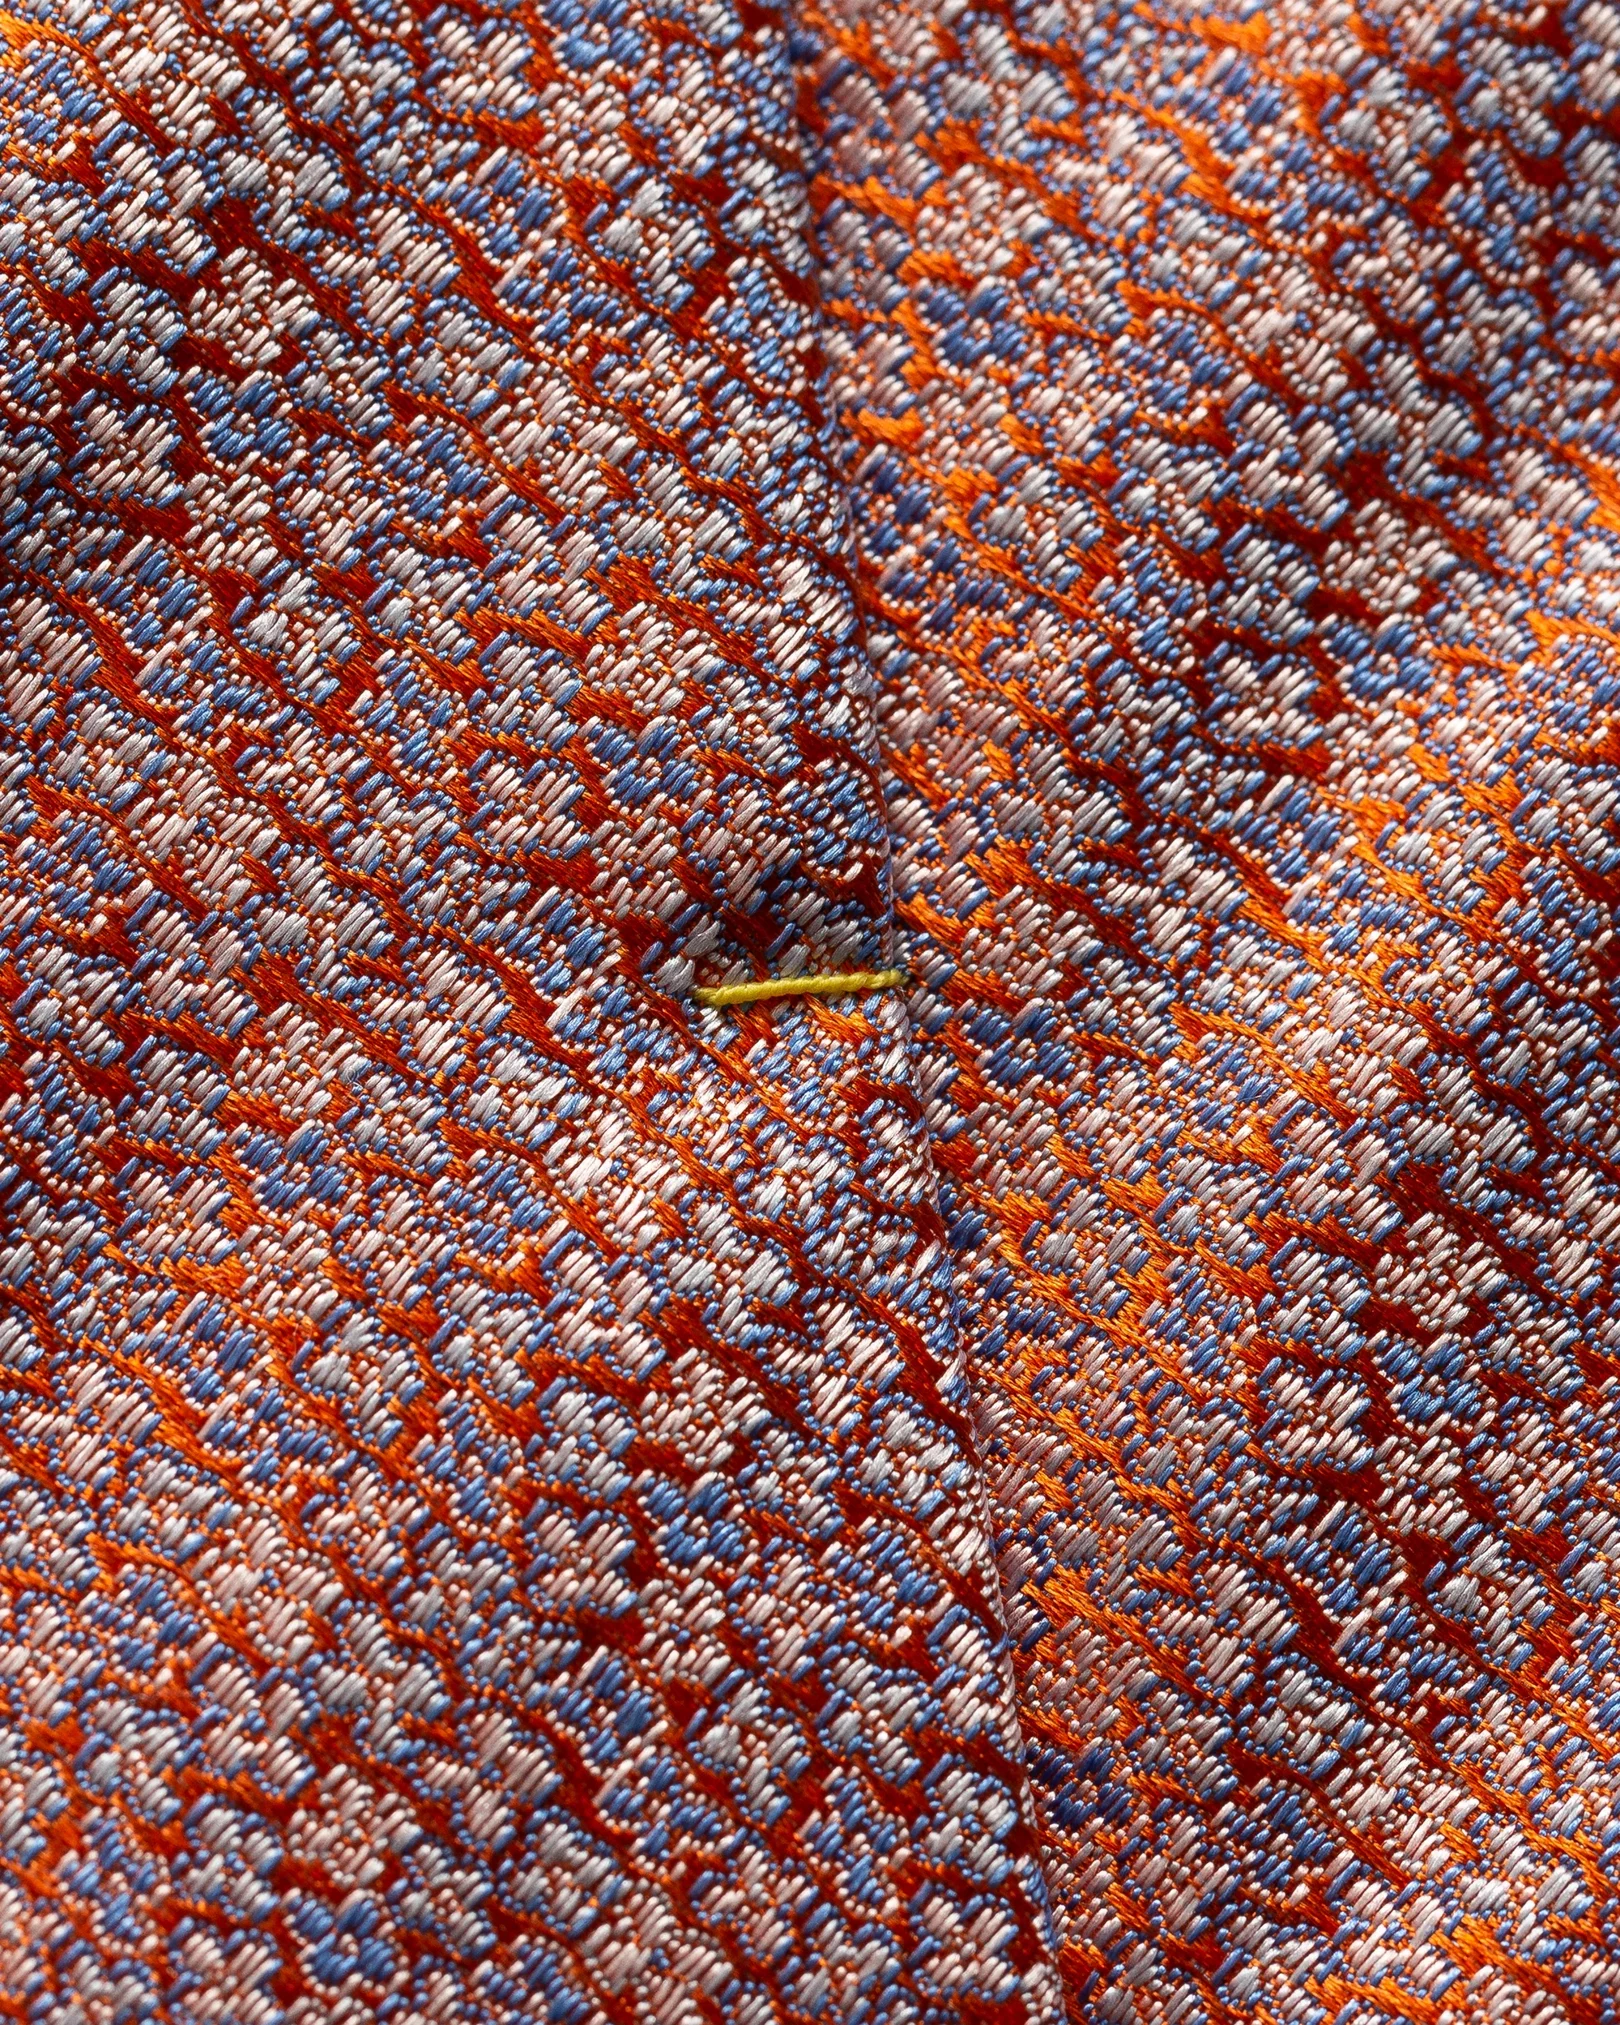 Eton - orange micro floral silk tie